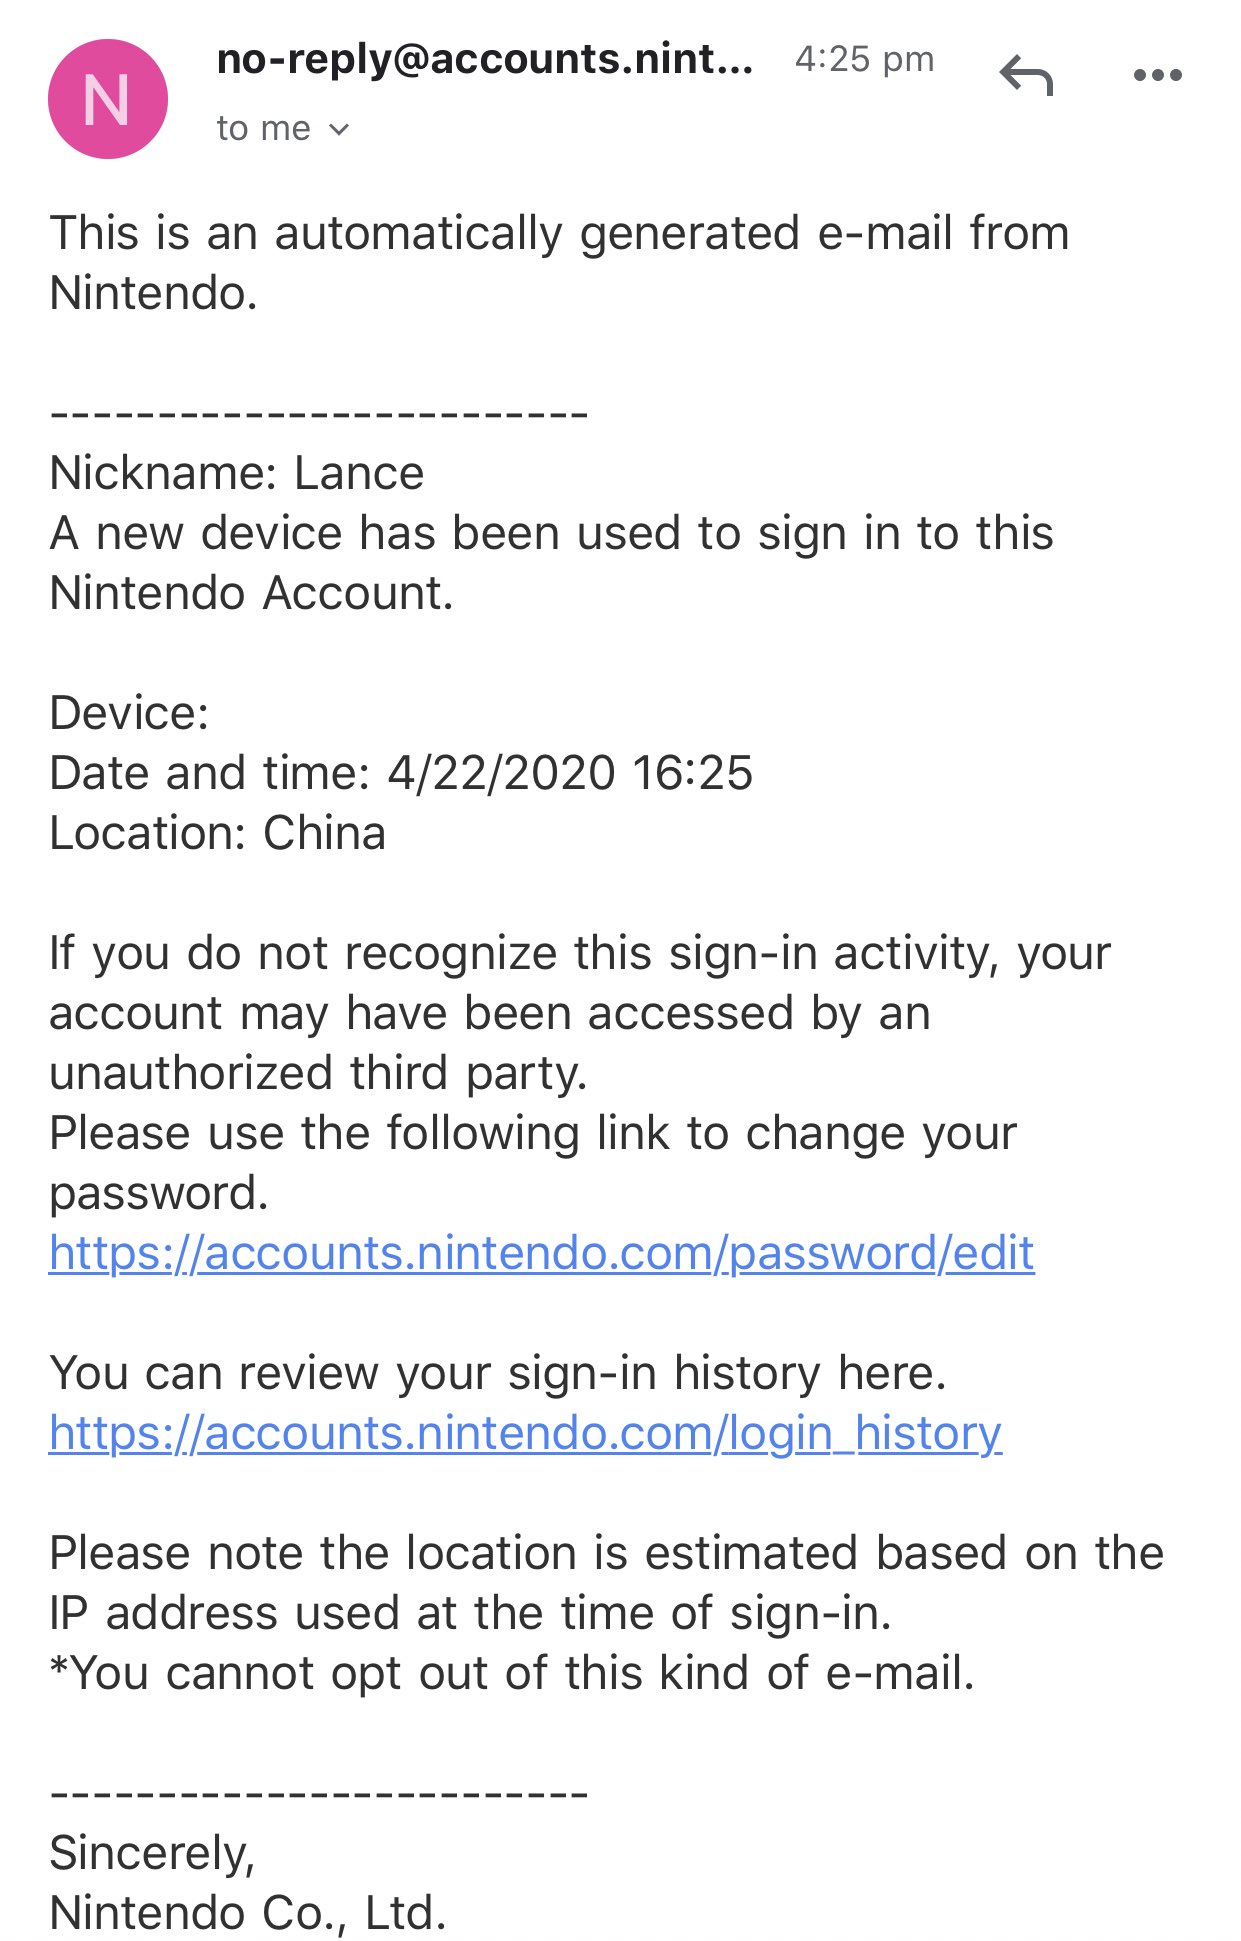 How to Delete Your Nintendo Account